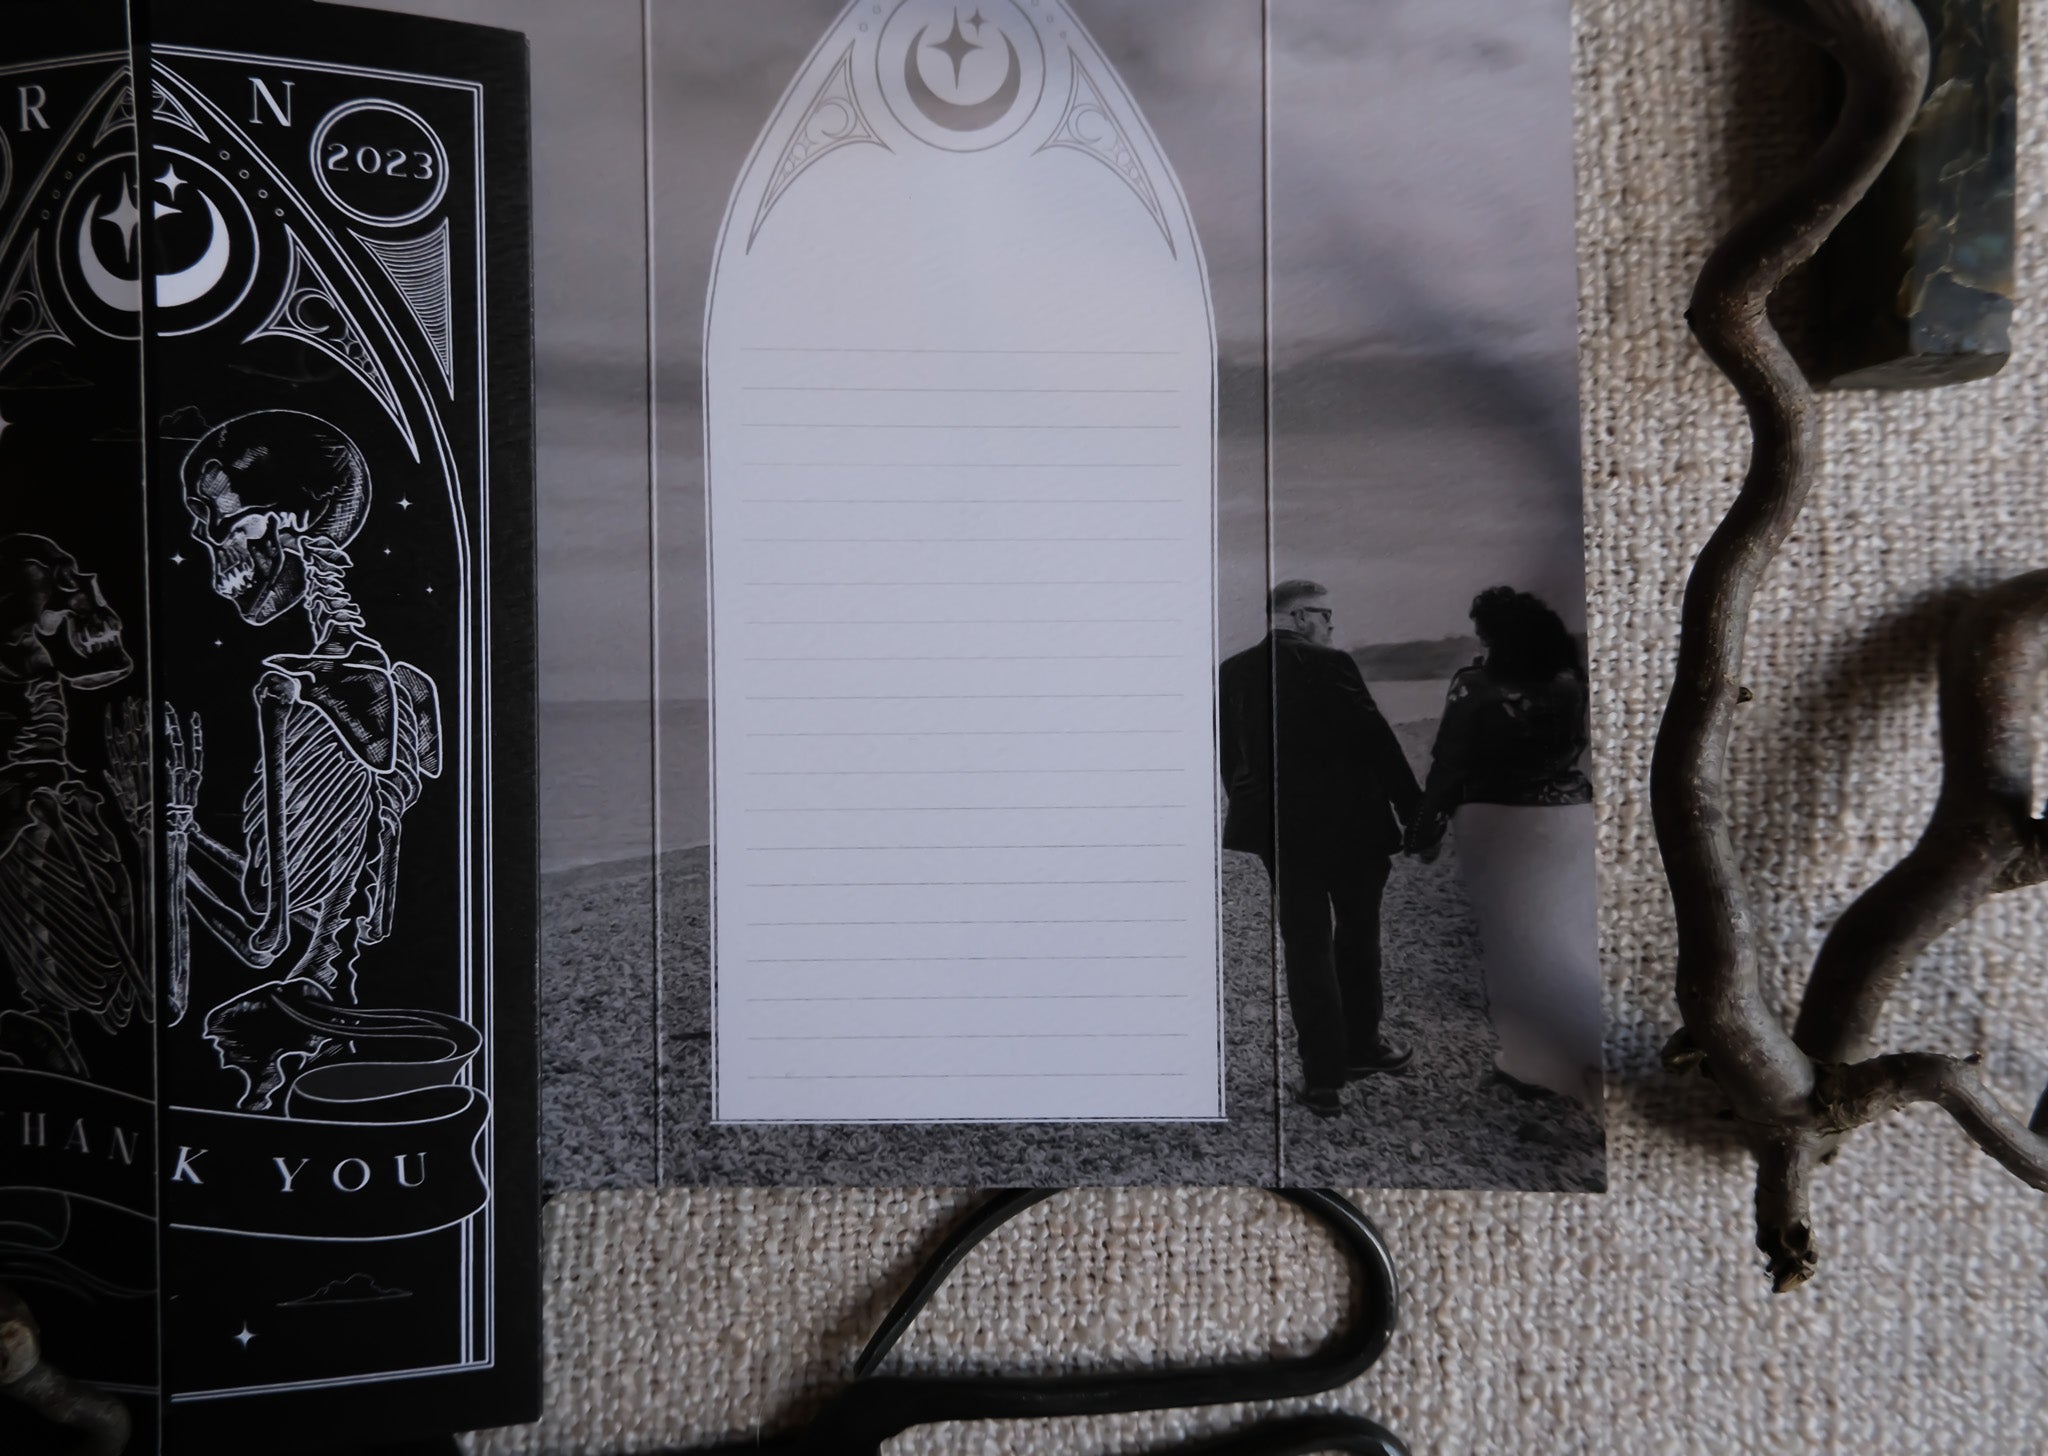 'Til Death Do Us Part' 'Thank You' Wedding Cards